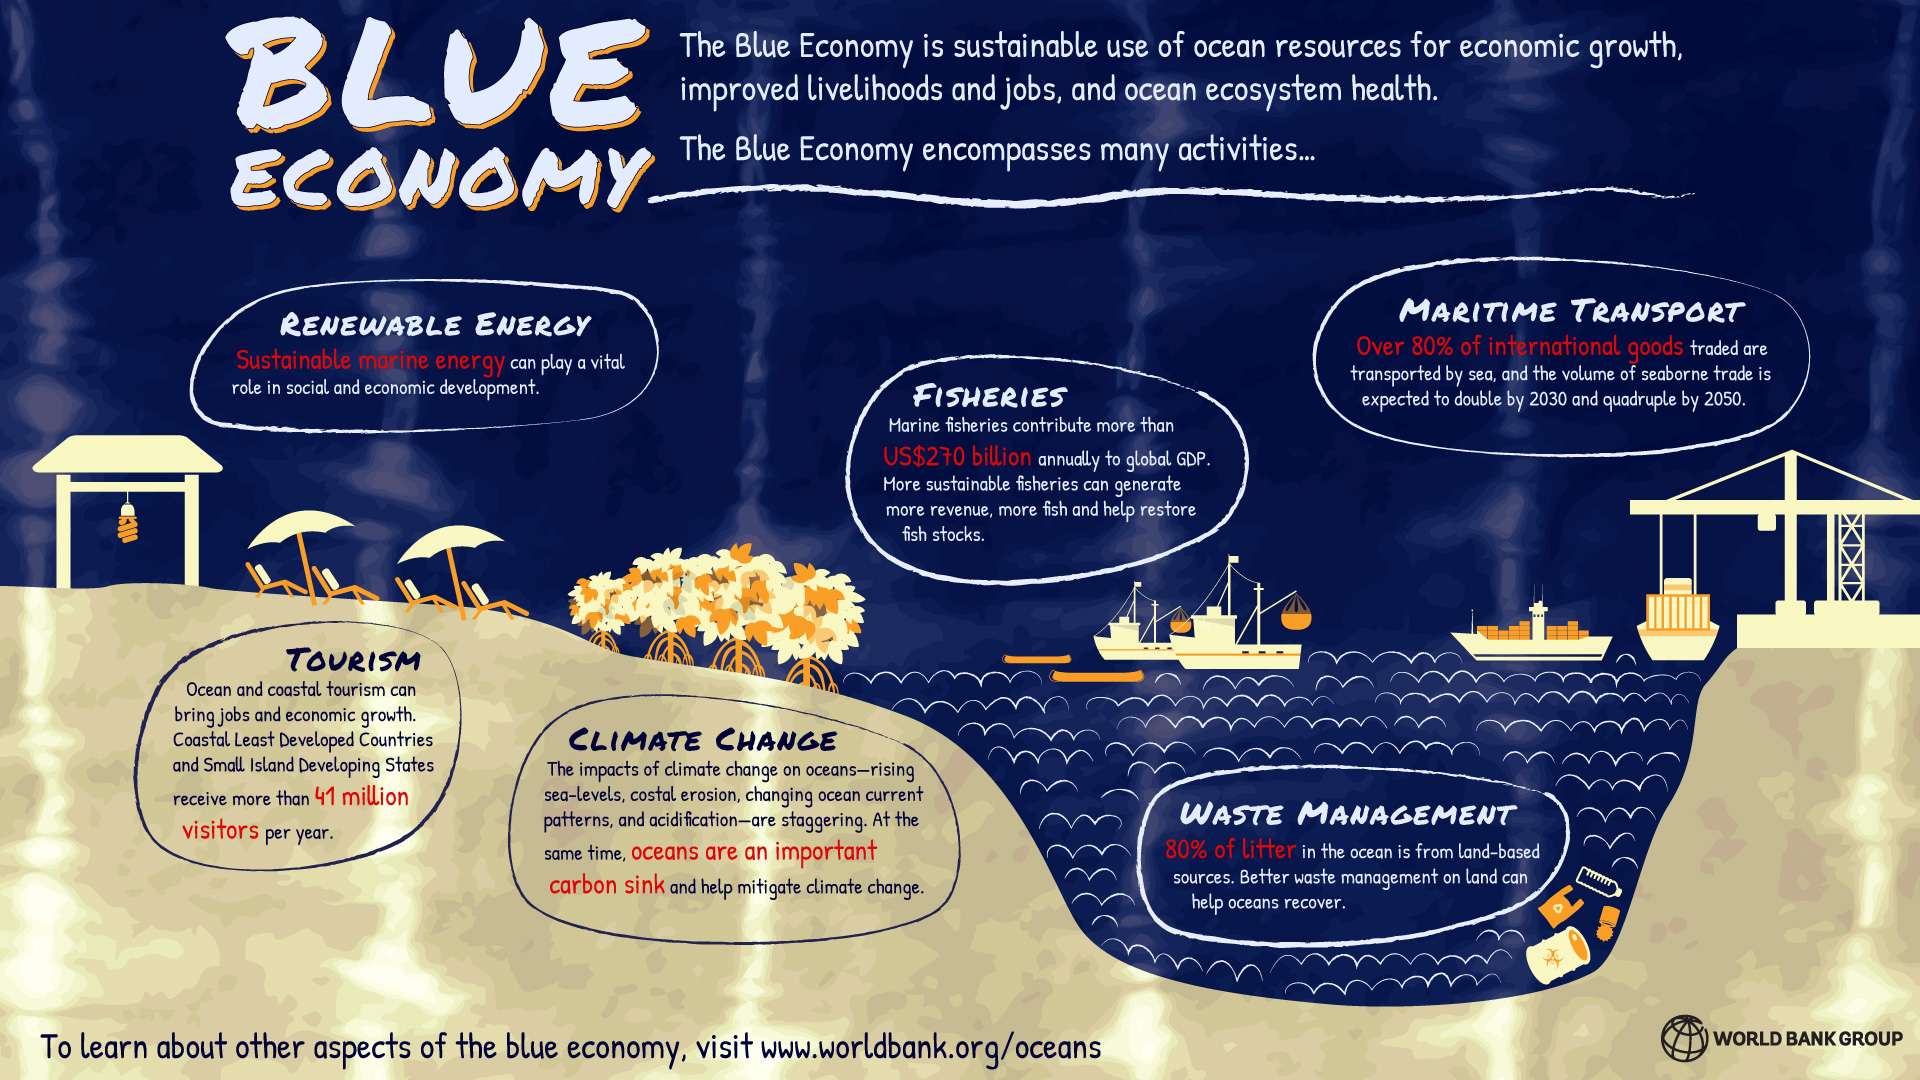 Blue Economy according to World Bank